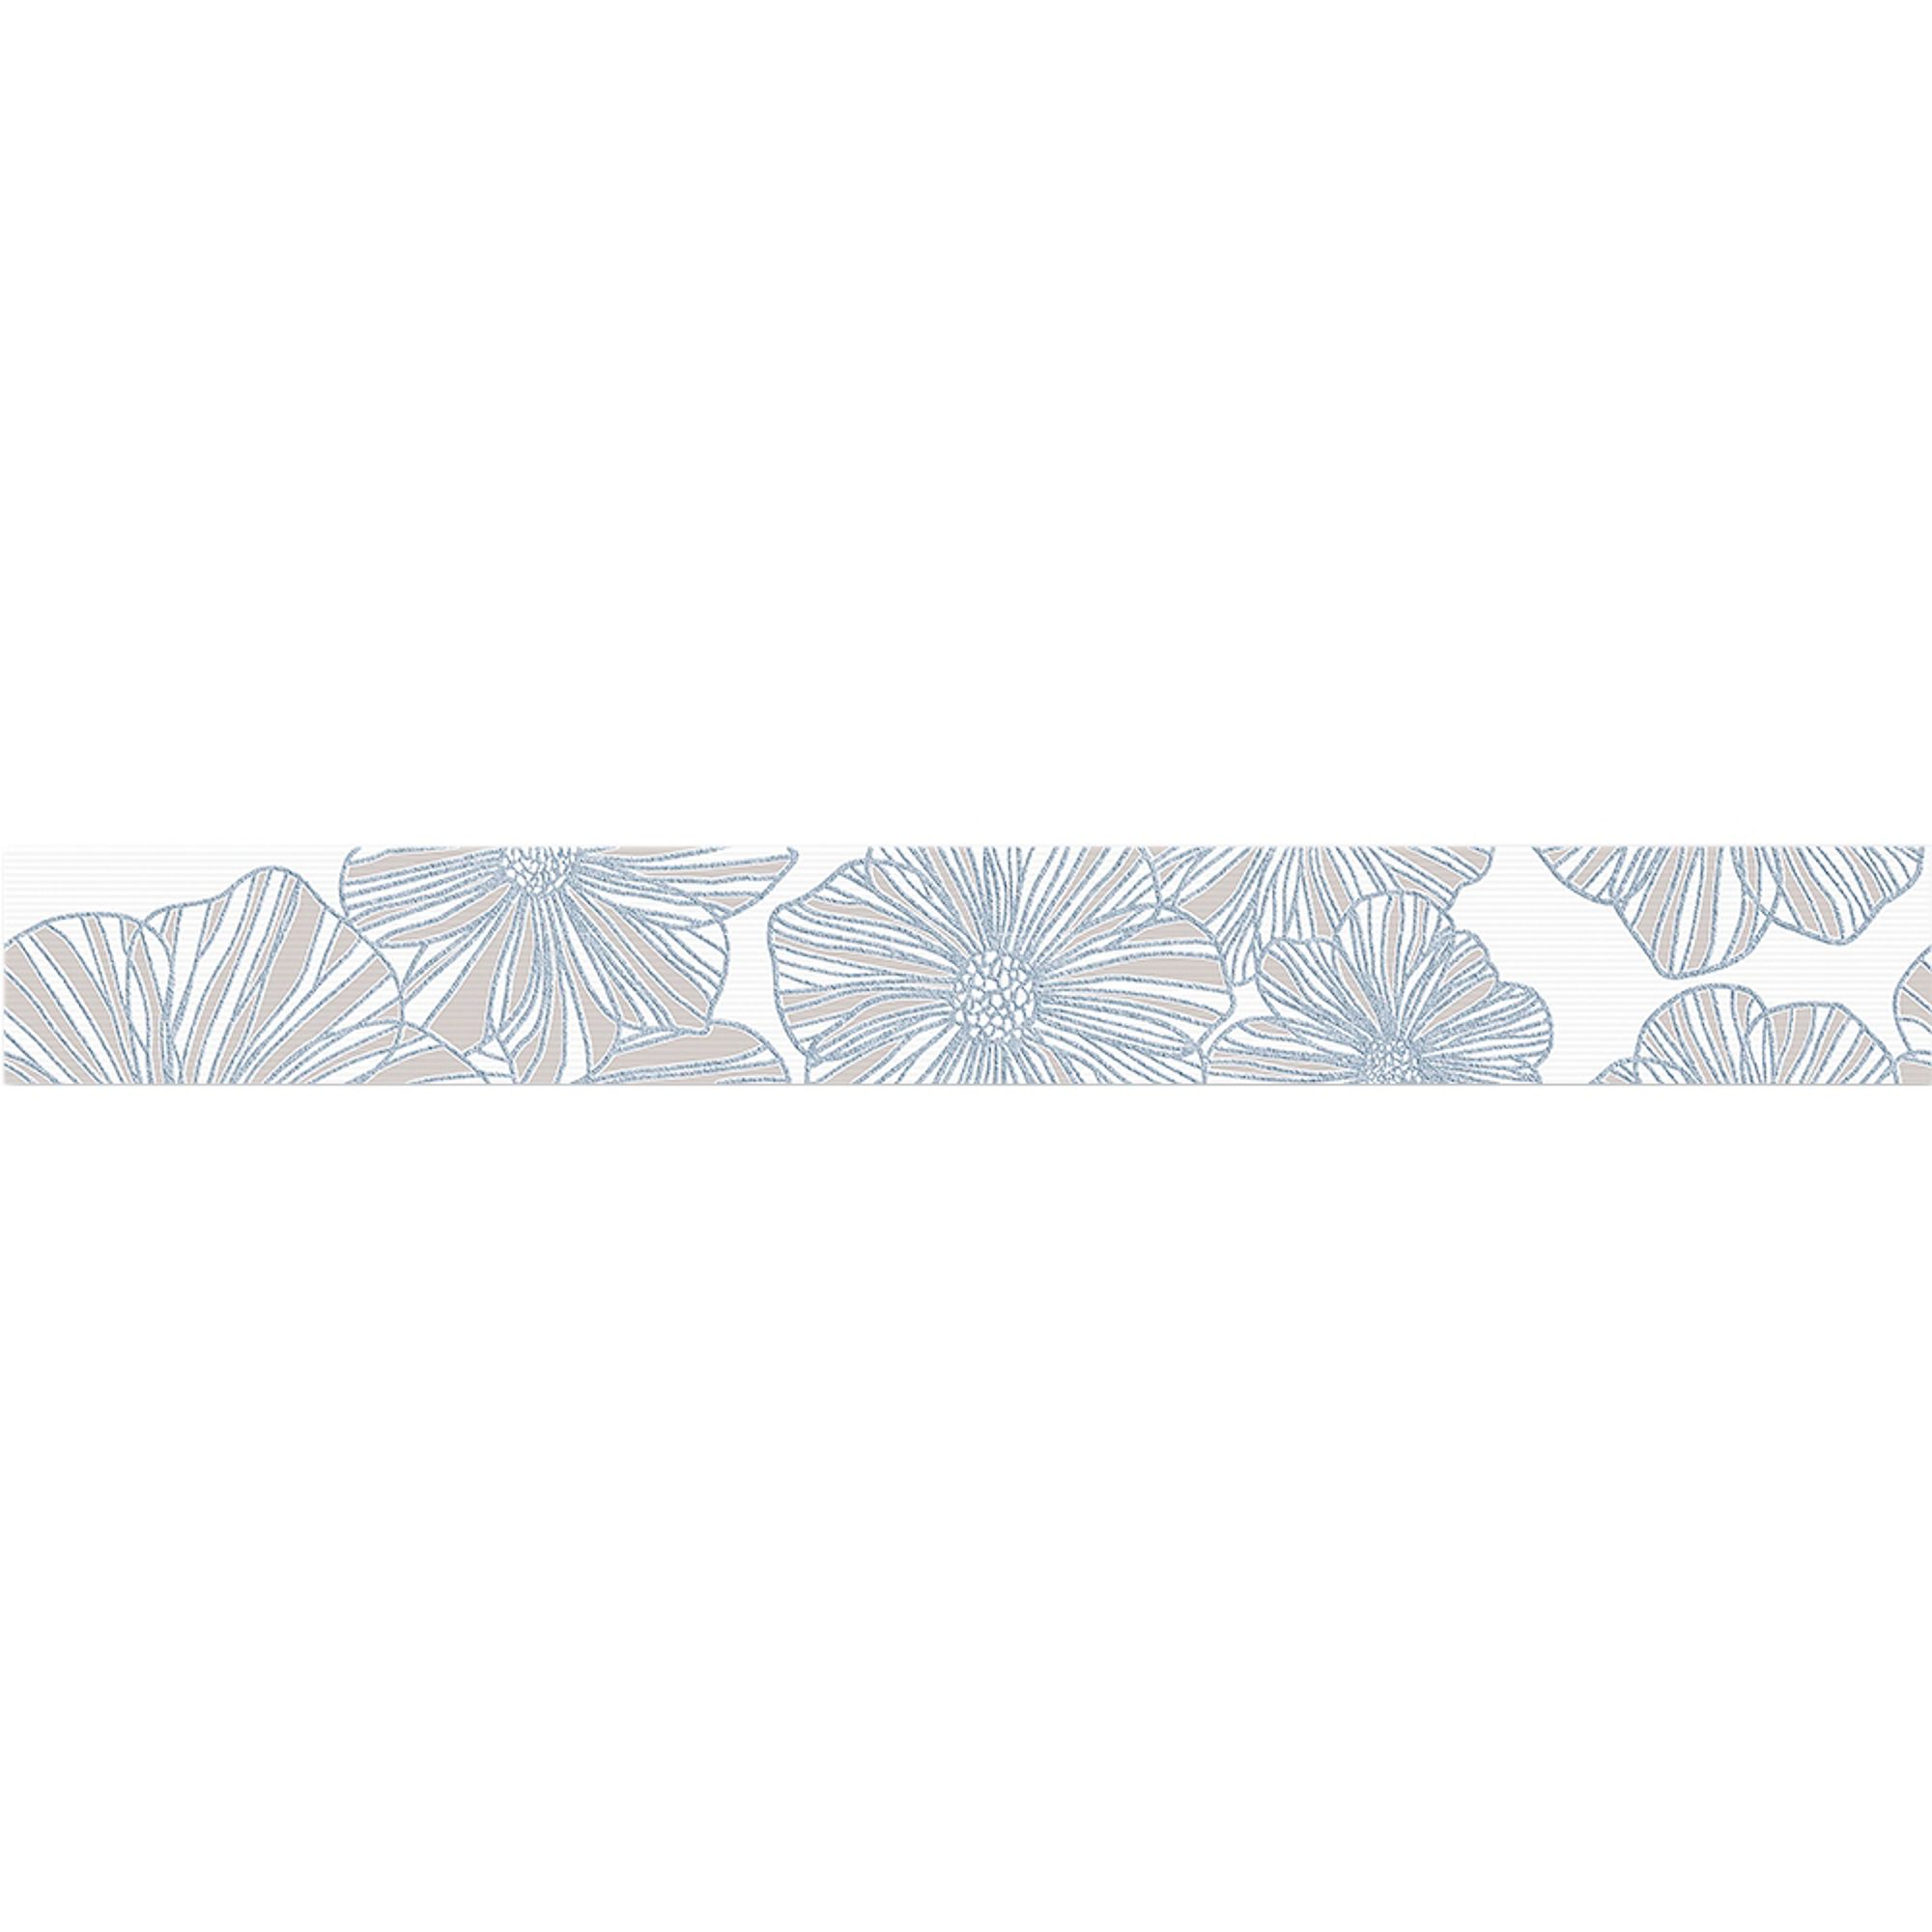 Бордюр Kerlife Splendida Blanco 50,5x6,2 см бордюр kerlife eterna beige 16 2x20 1 см